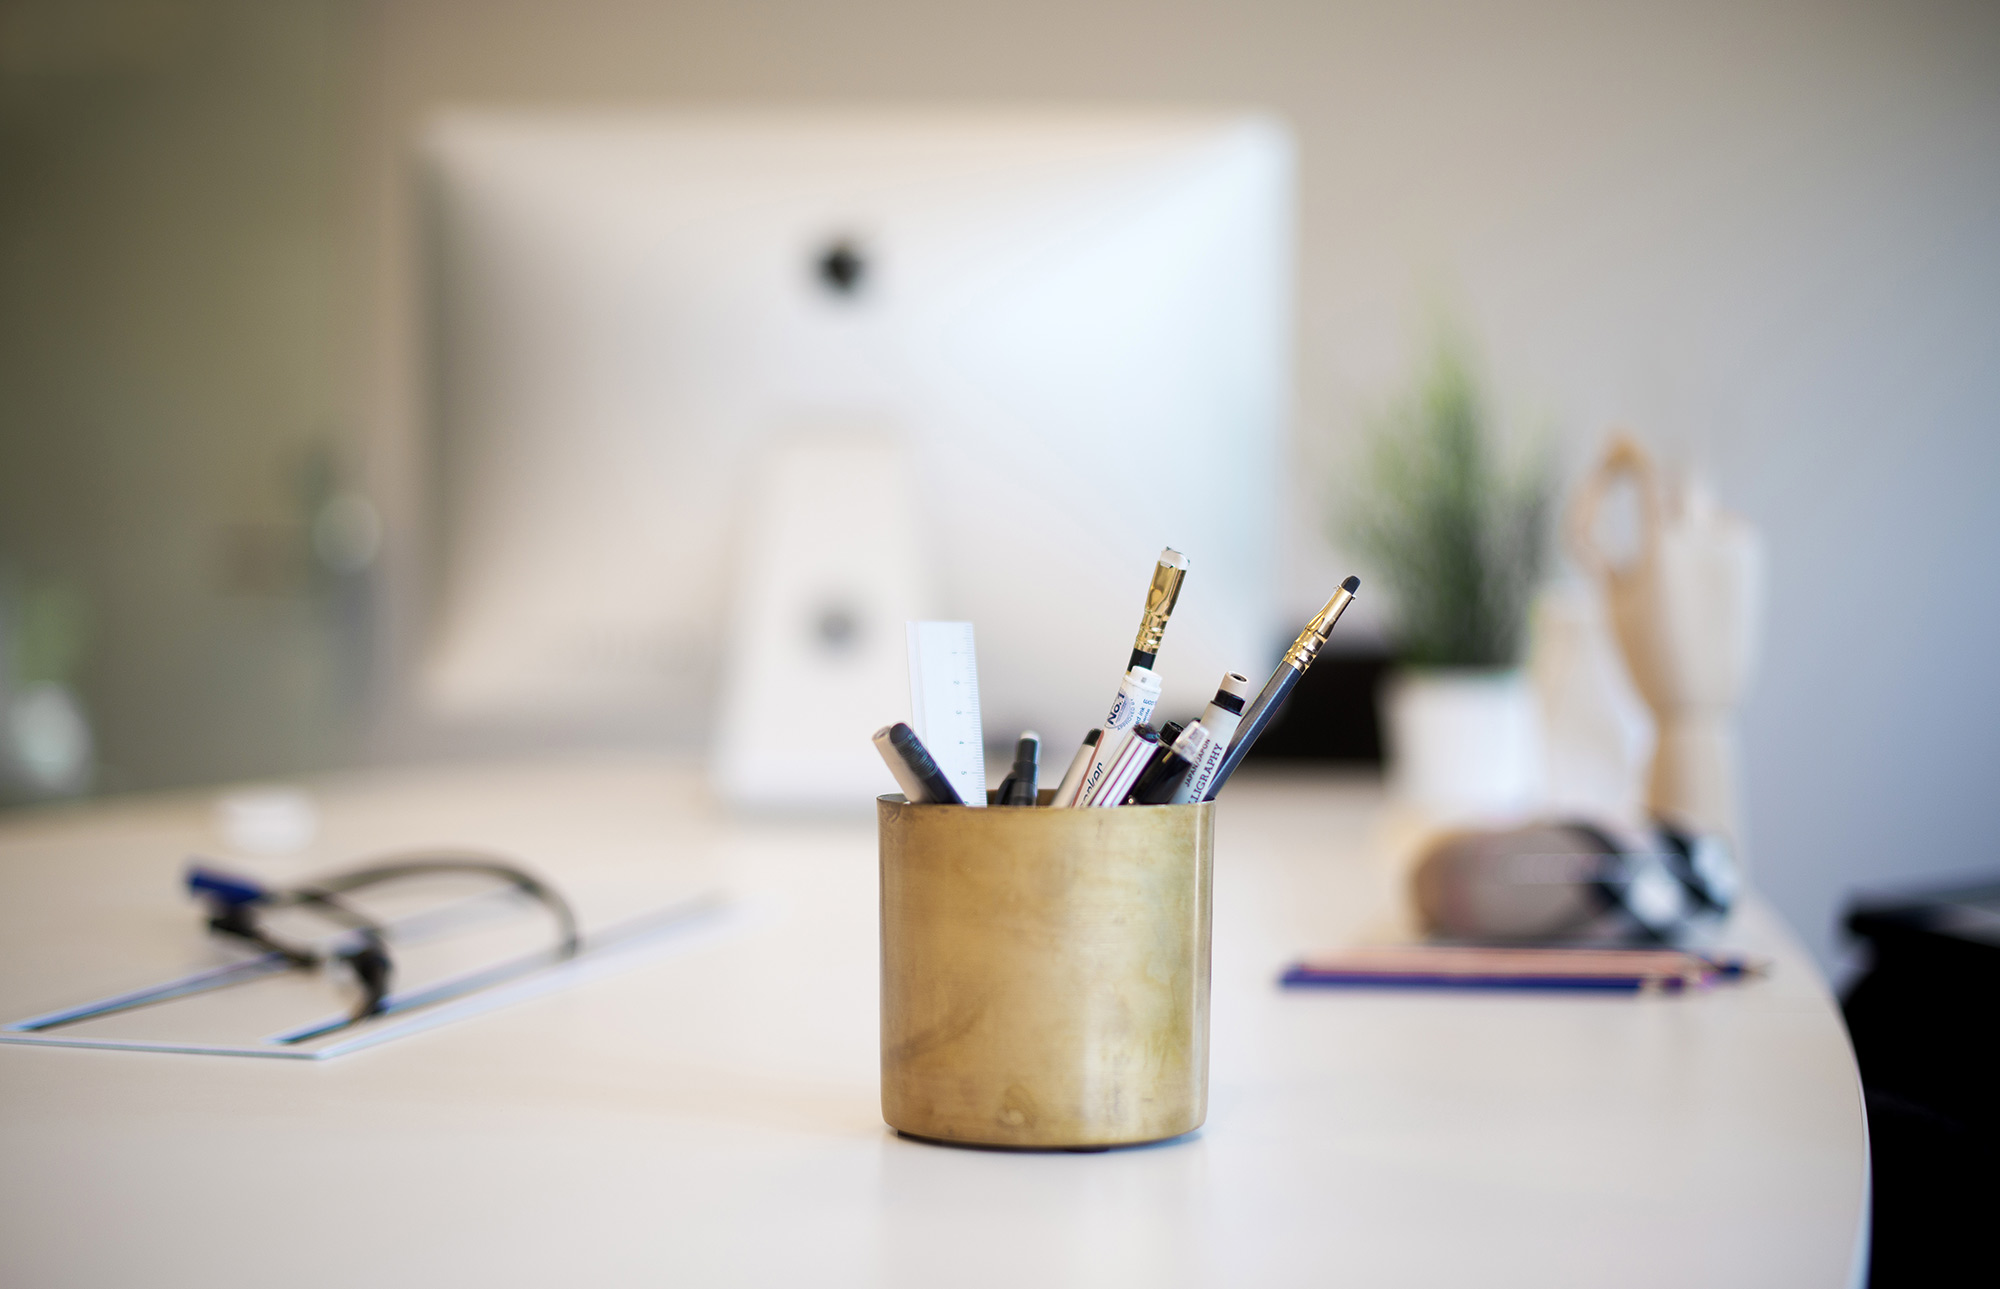 Skrivebord med mac, kopp med penner og blyanter og andre kontorartikler